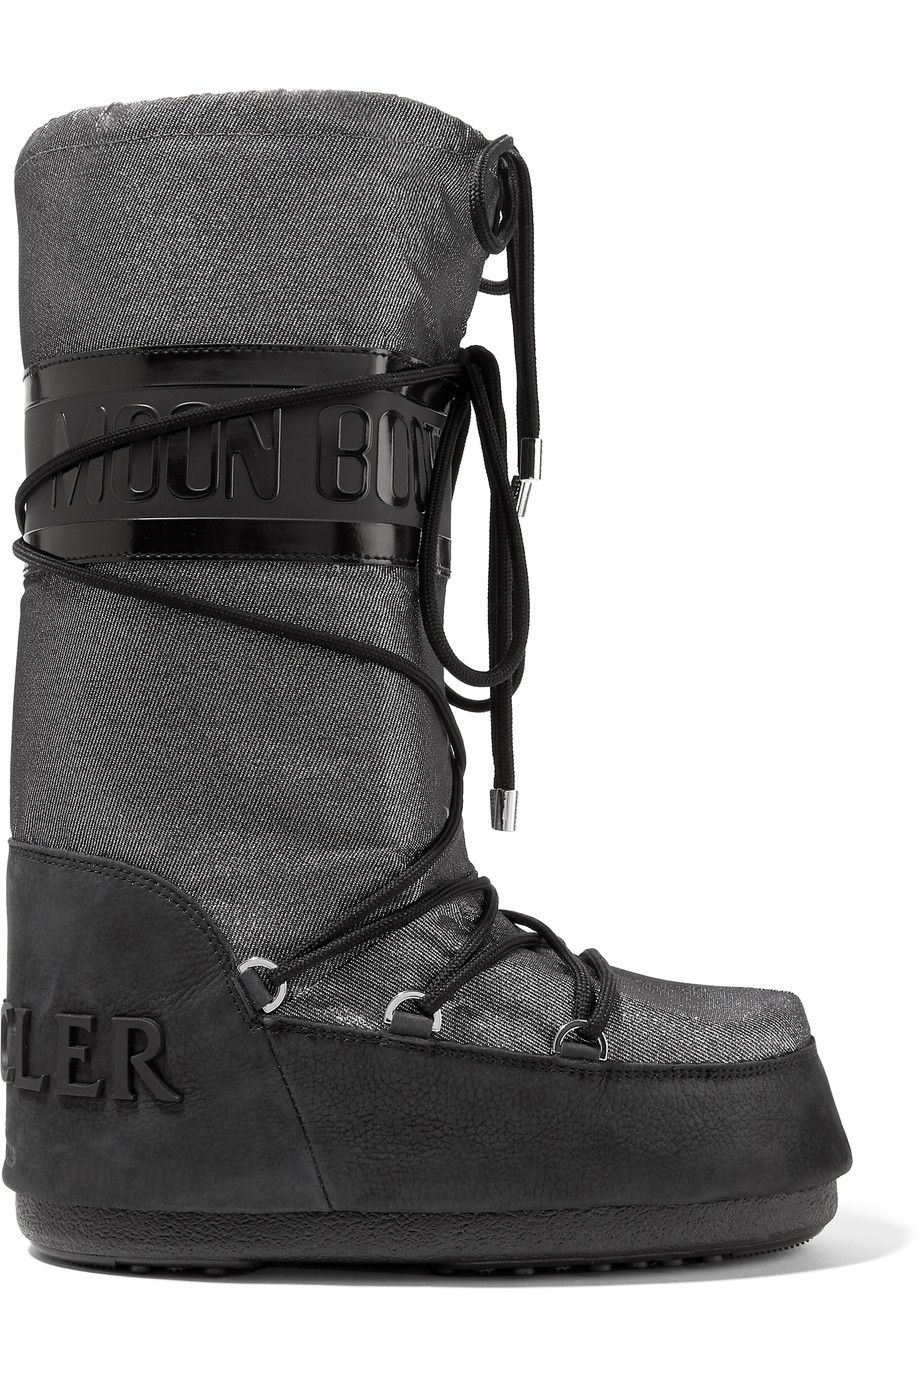 Footwear, Boot, Black, Shoe, Snow boot, 